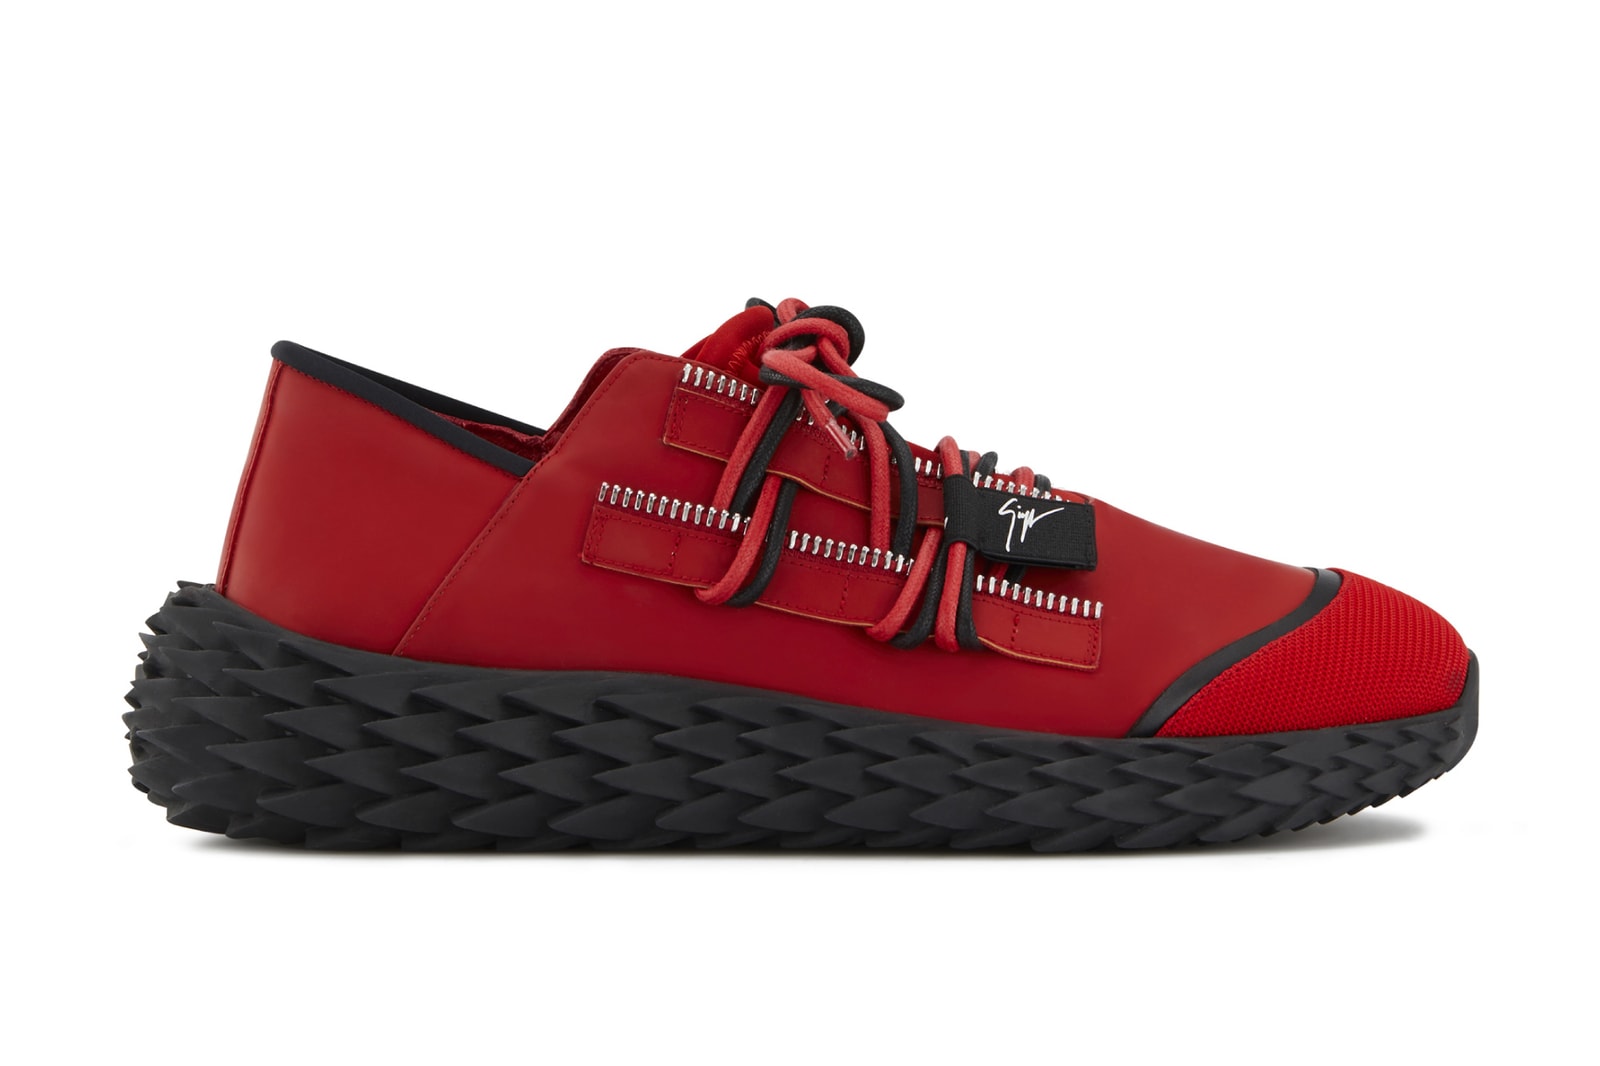 Giuseppe Zanotti 推出令人過目不忘的全新標誌性鞋履 Urchin